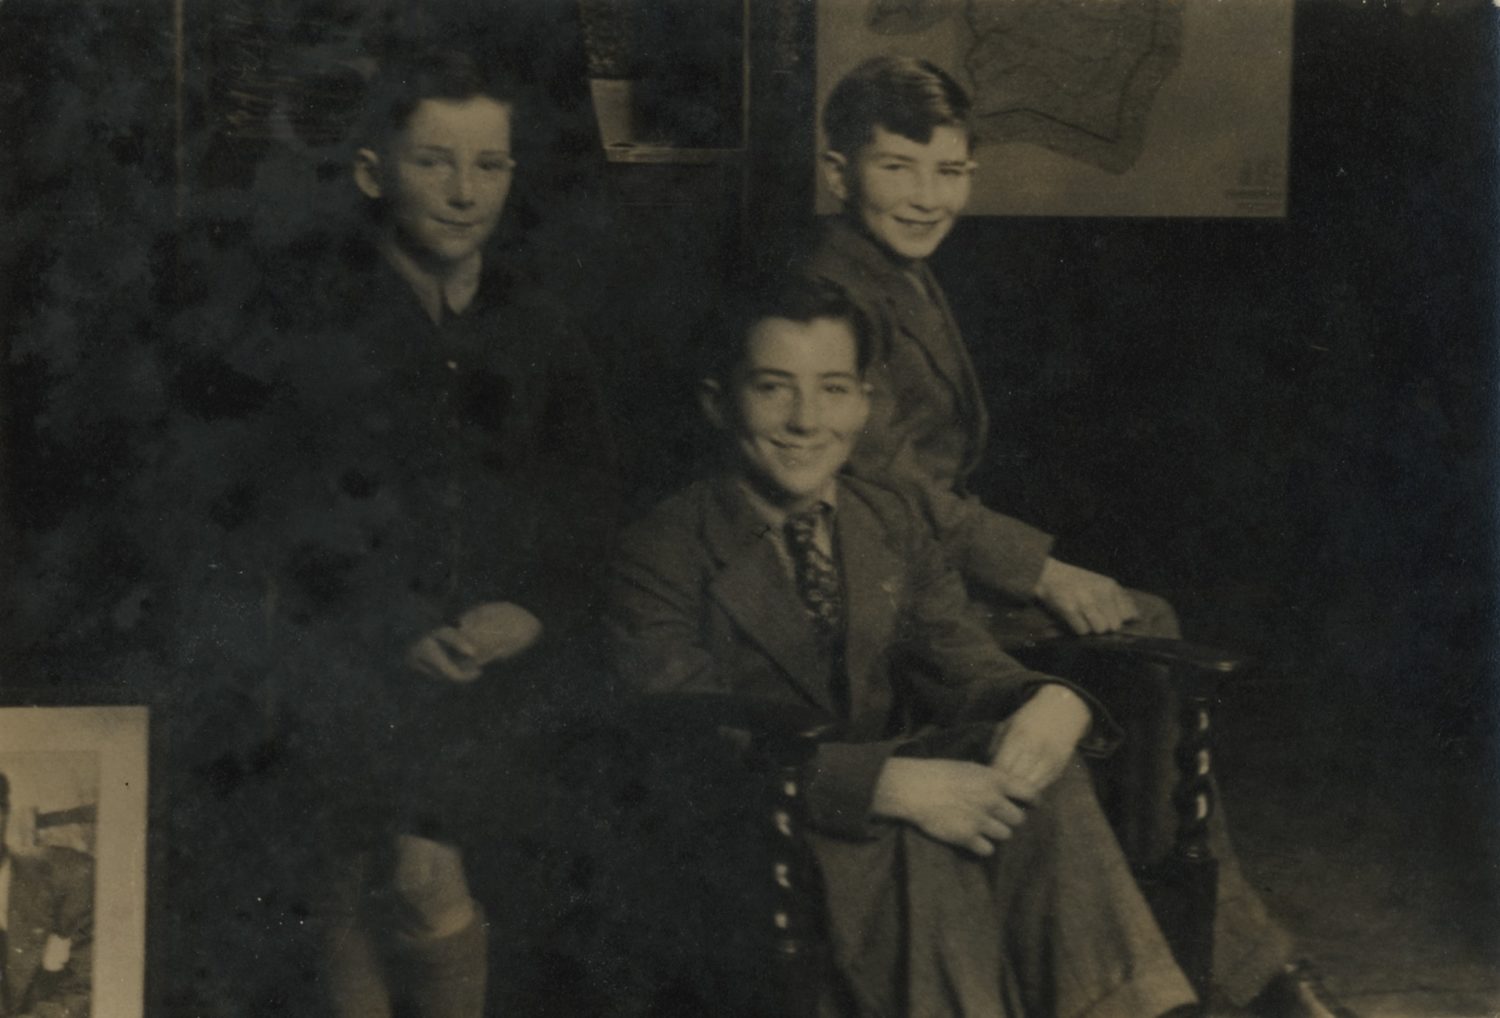 Family Album, image 6, cropped